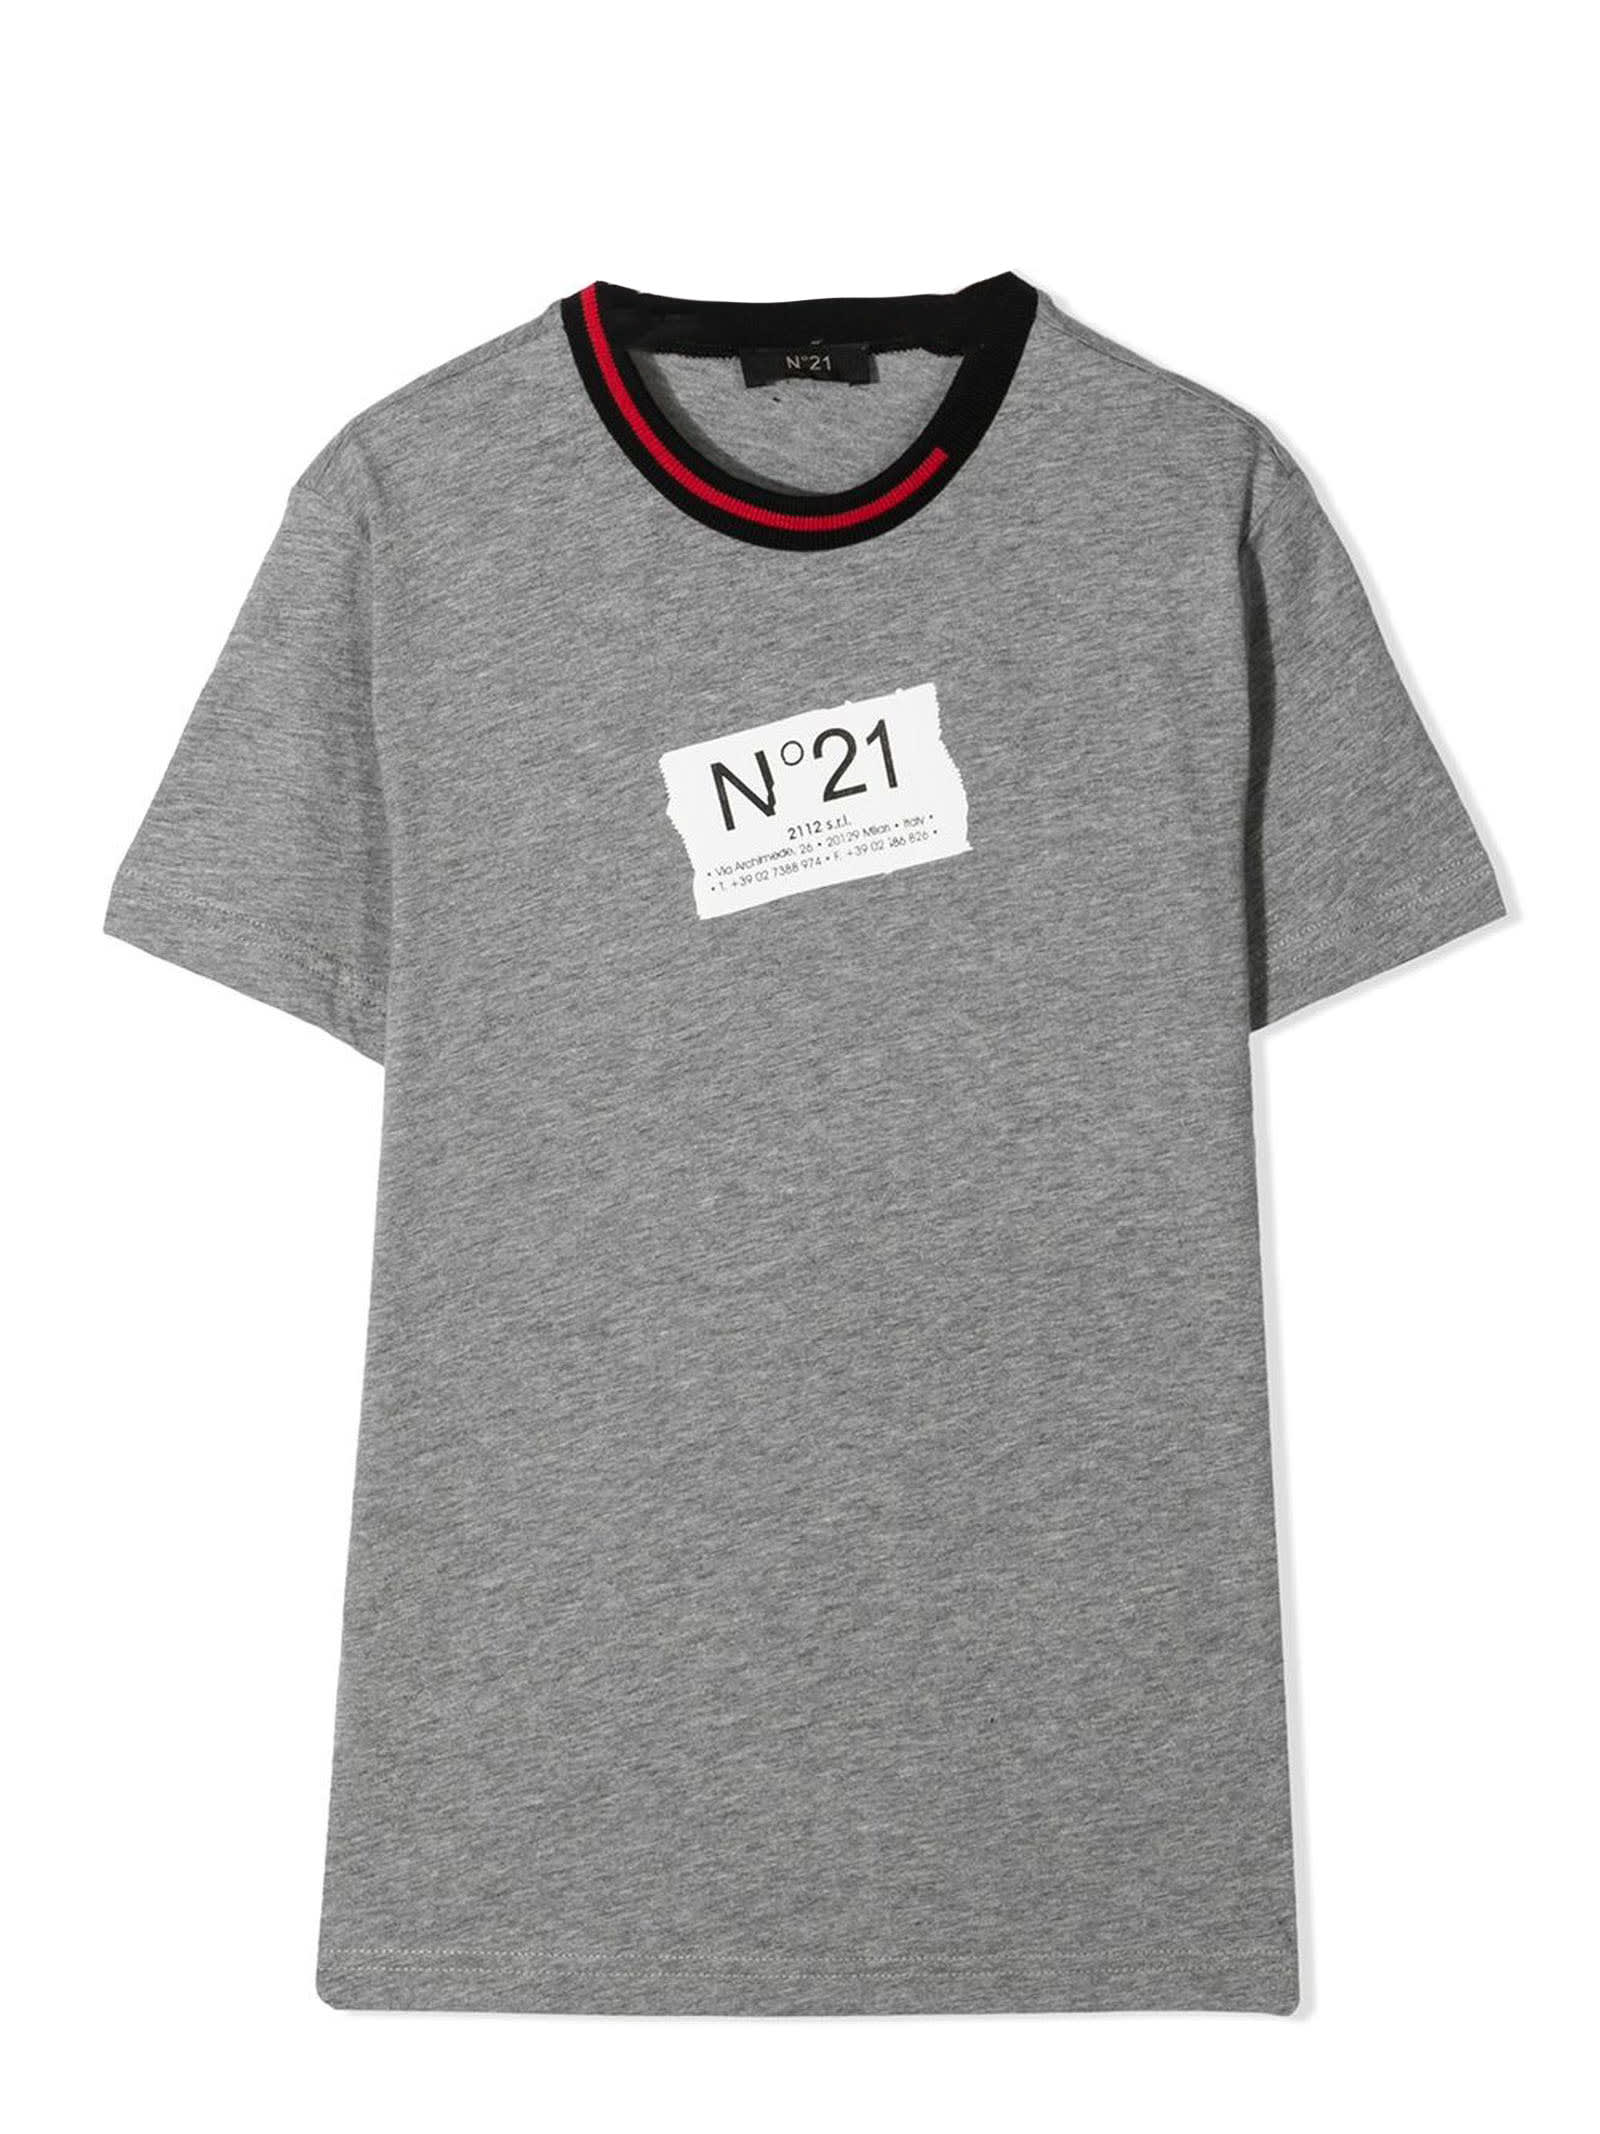 N.21 Grey Cotton T-shirt